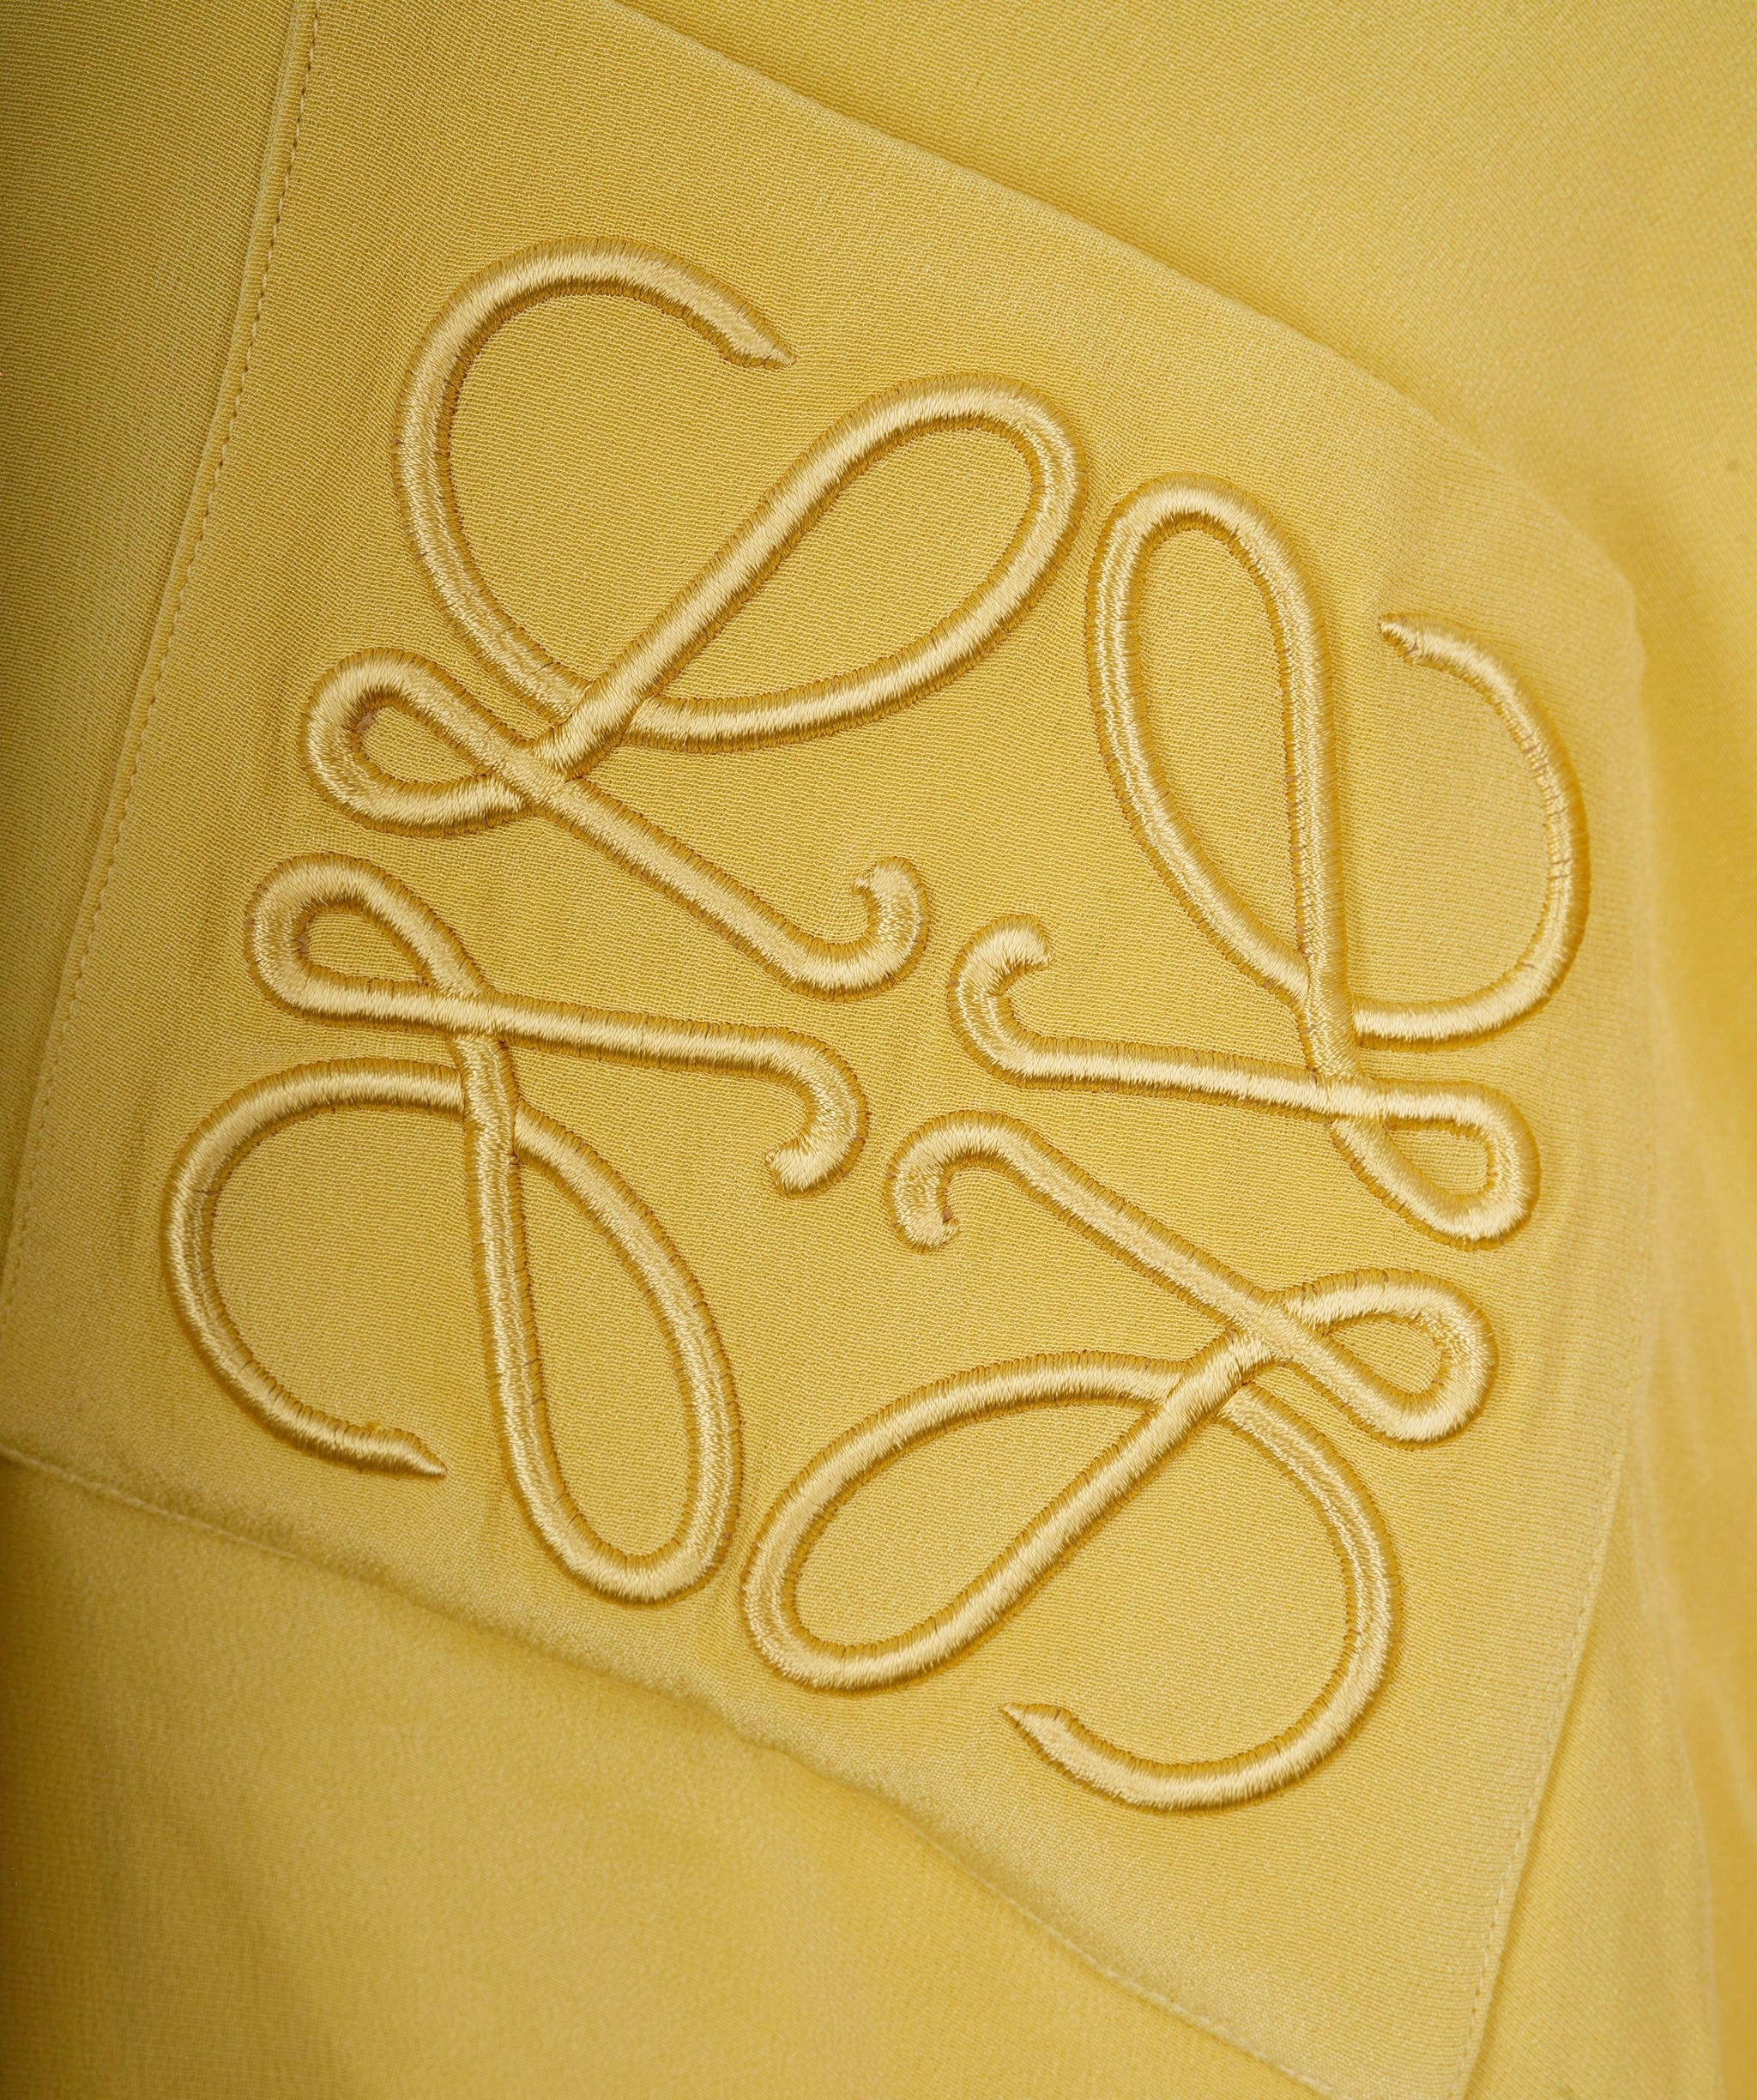 Loewe Loewe Anagram Logo Yellow Blouse  ALC0835